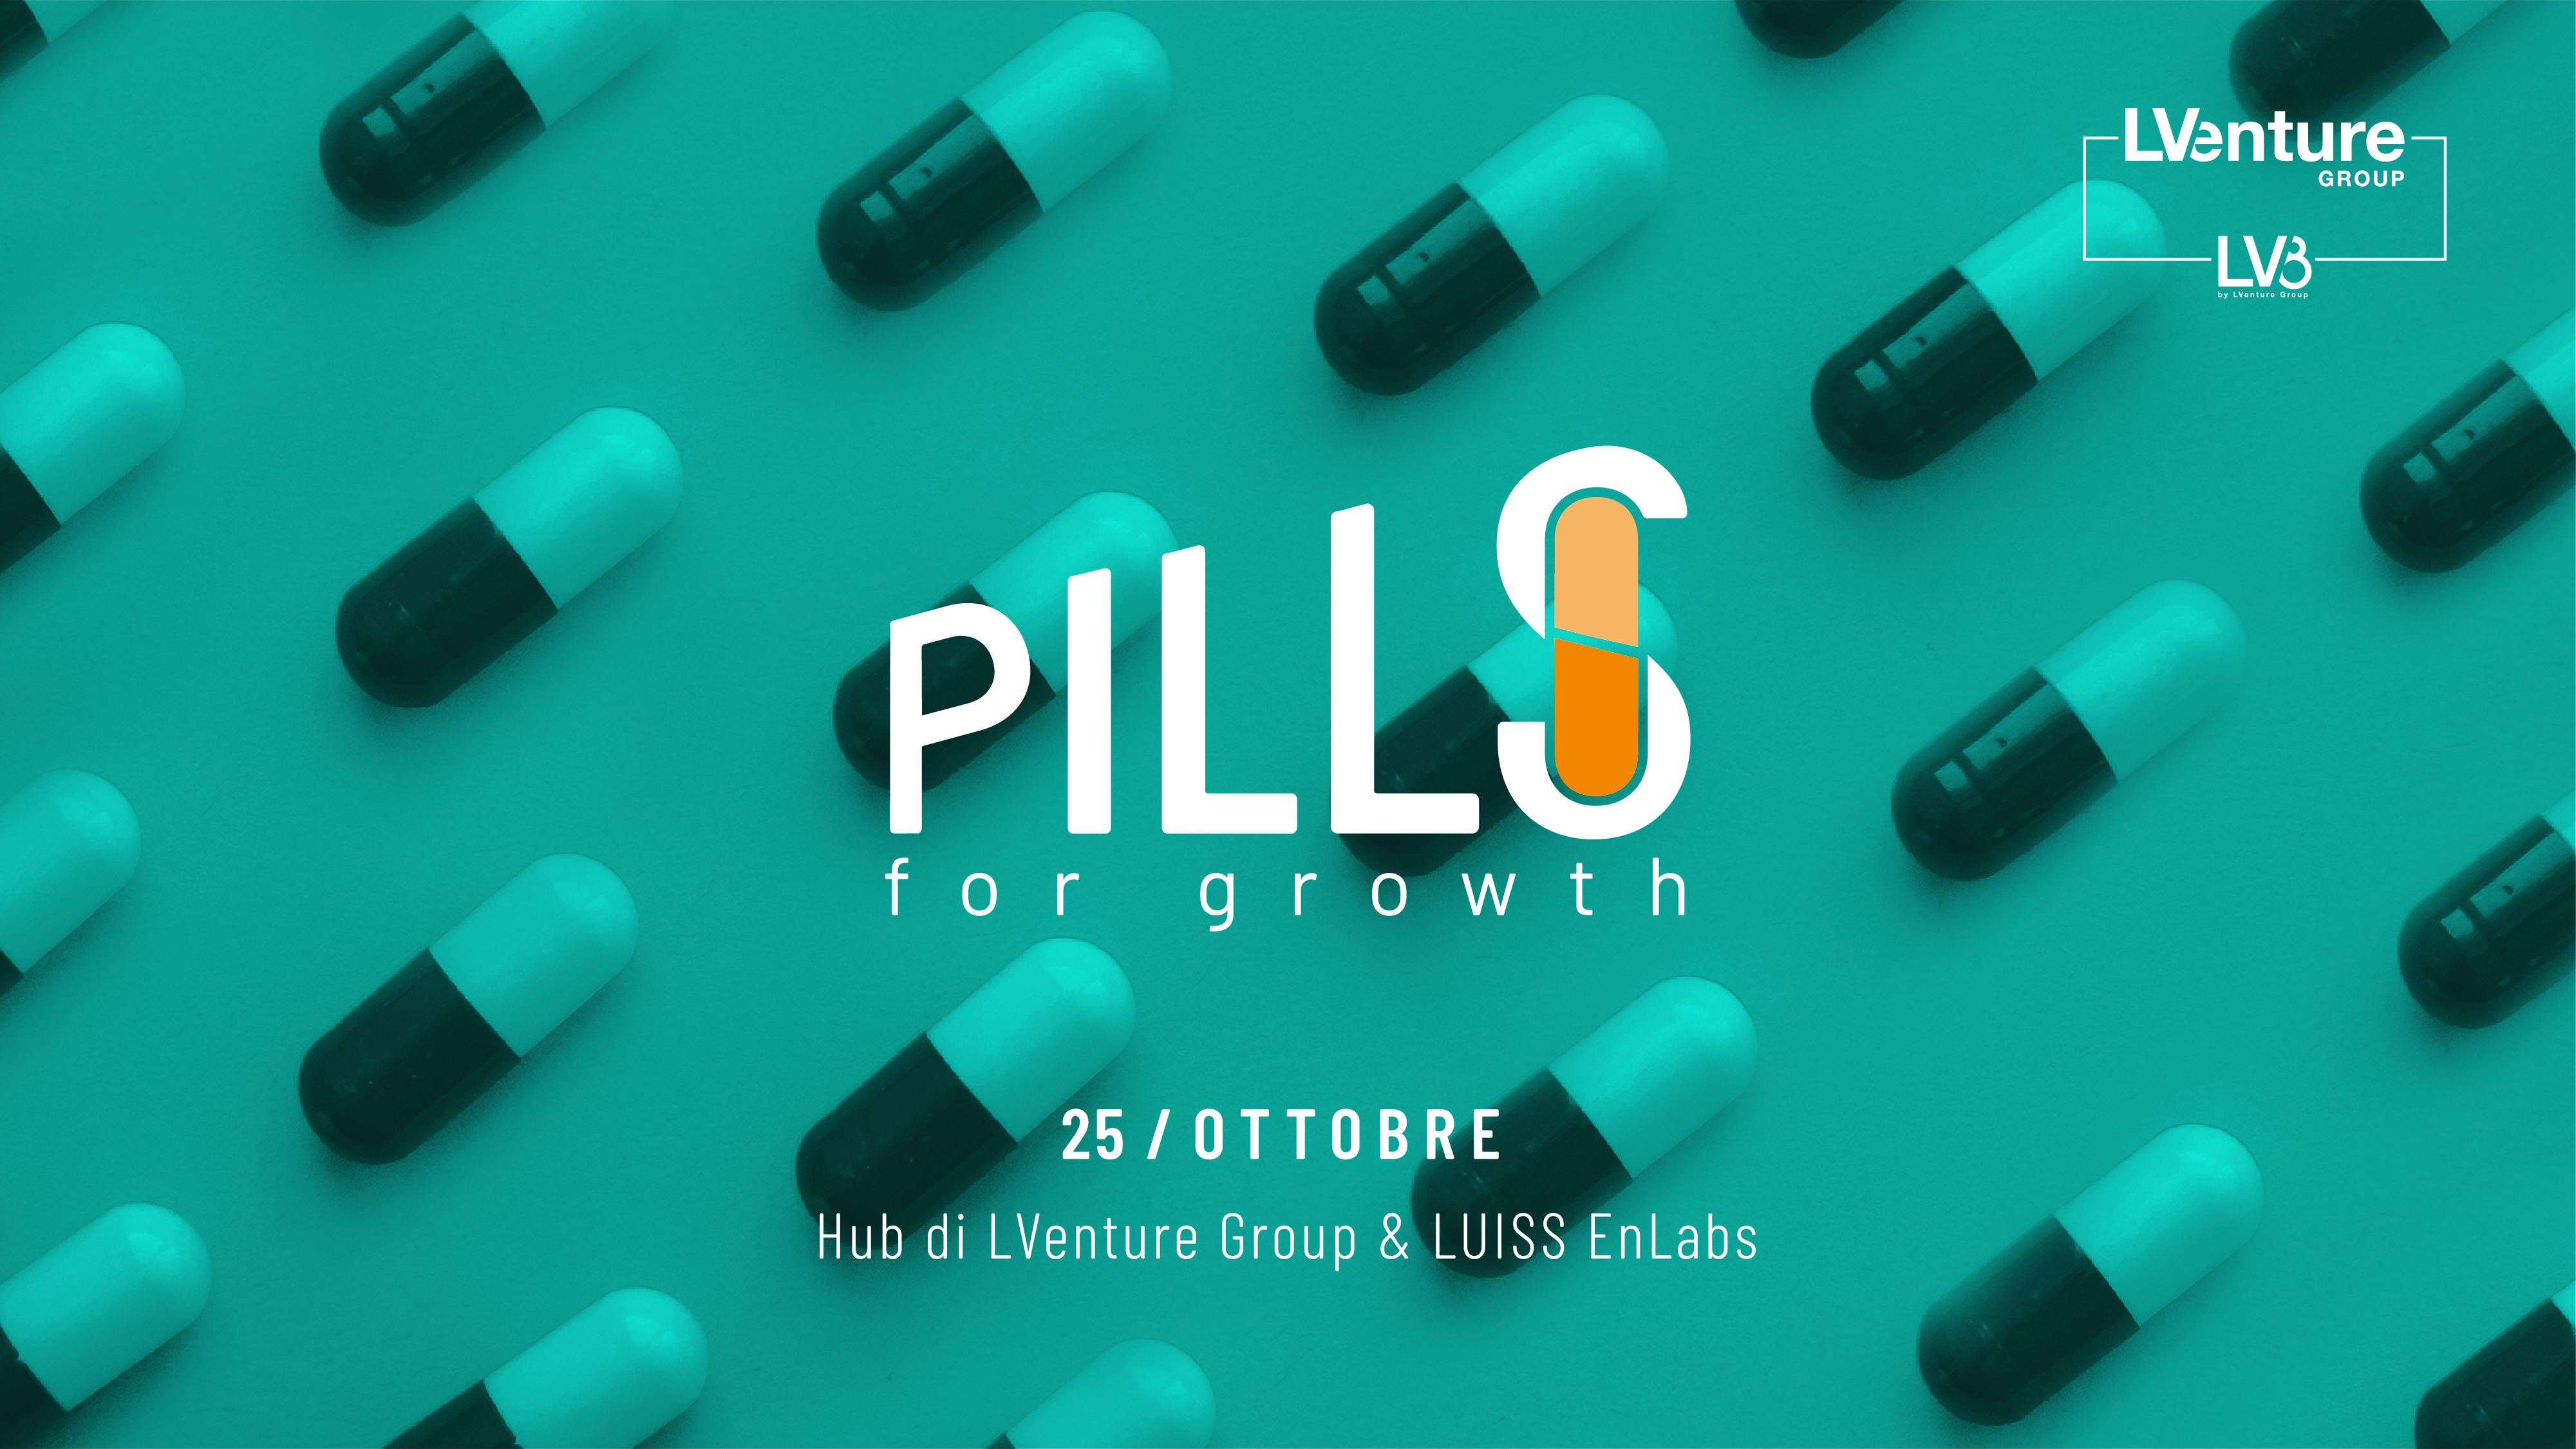 LVenture Group lancia “Pills for Growth”, il nuovo format mensile dedicato al marketing digitale e al growth hacking